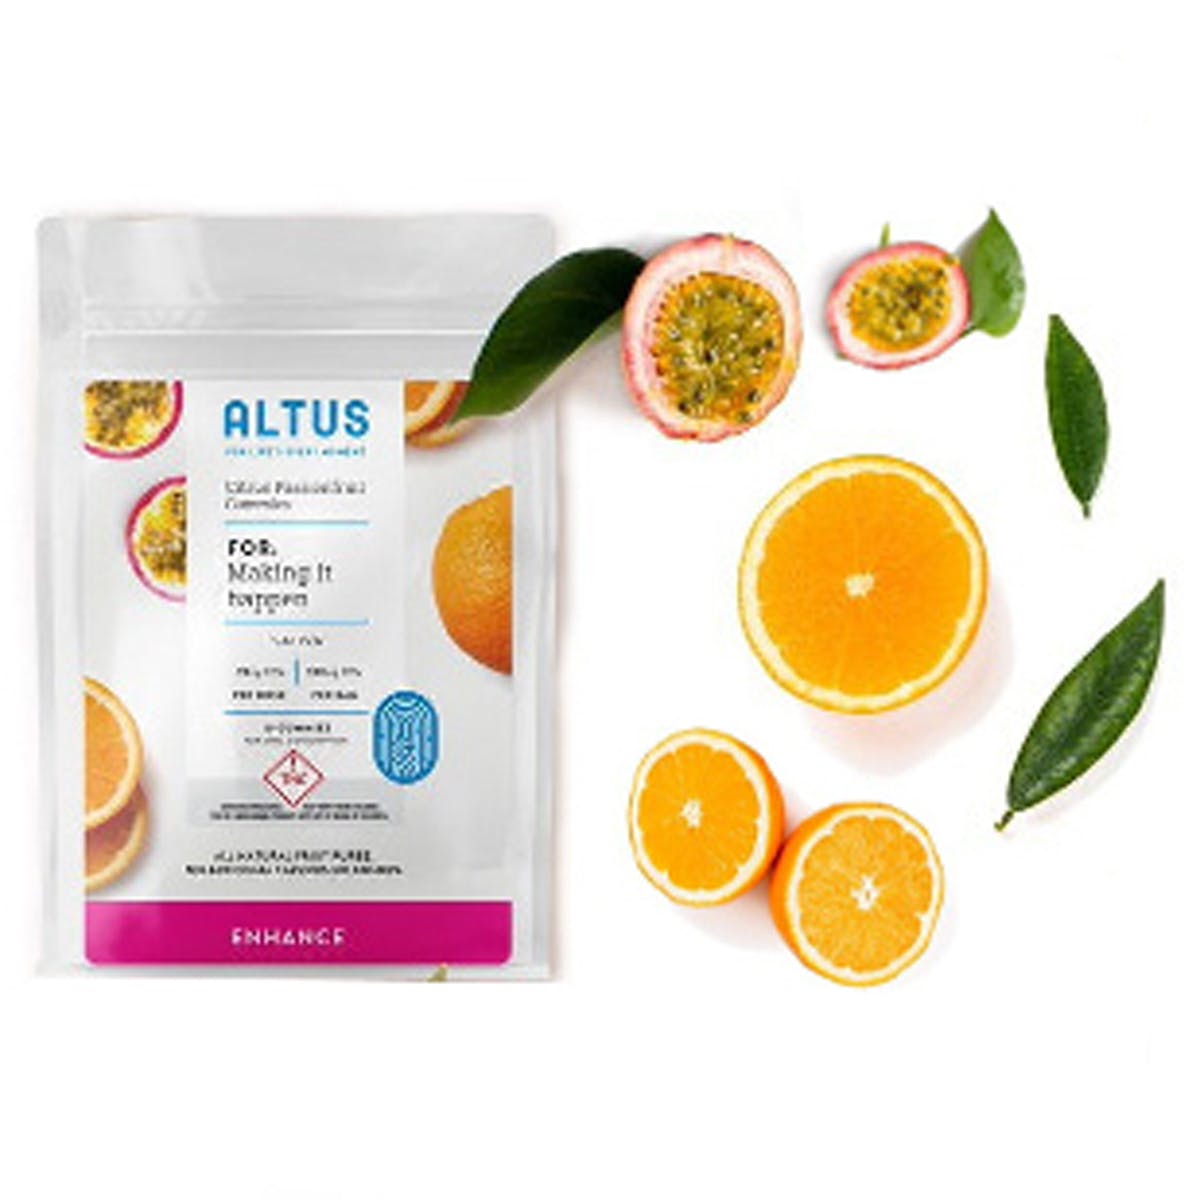 edible-altus-enhance-citrus-passionfruit-sativa-gummies-100mg